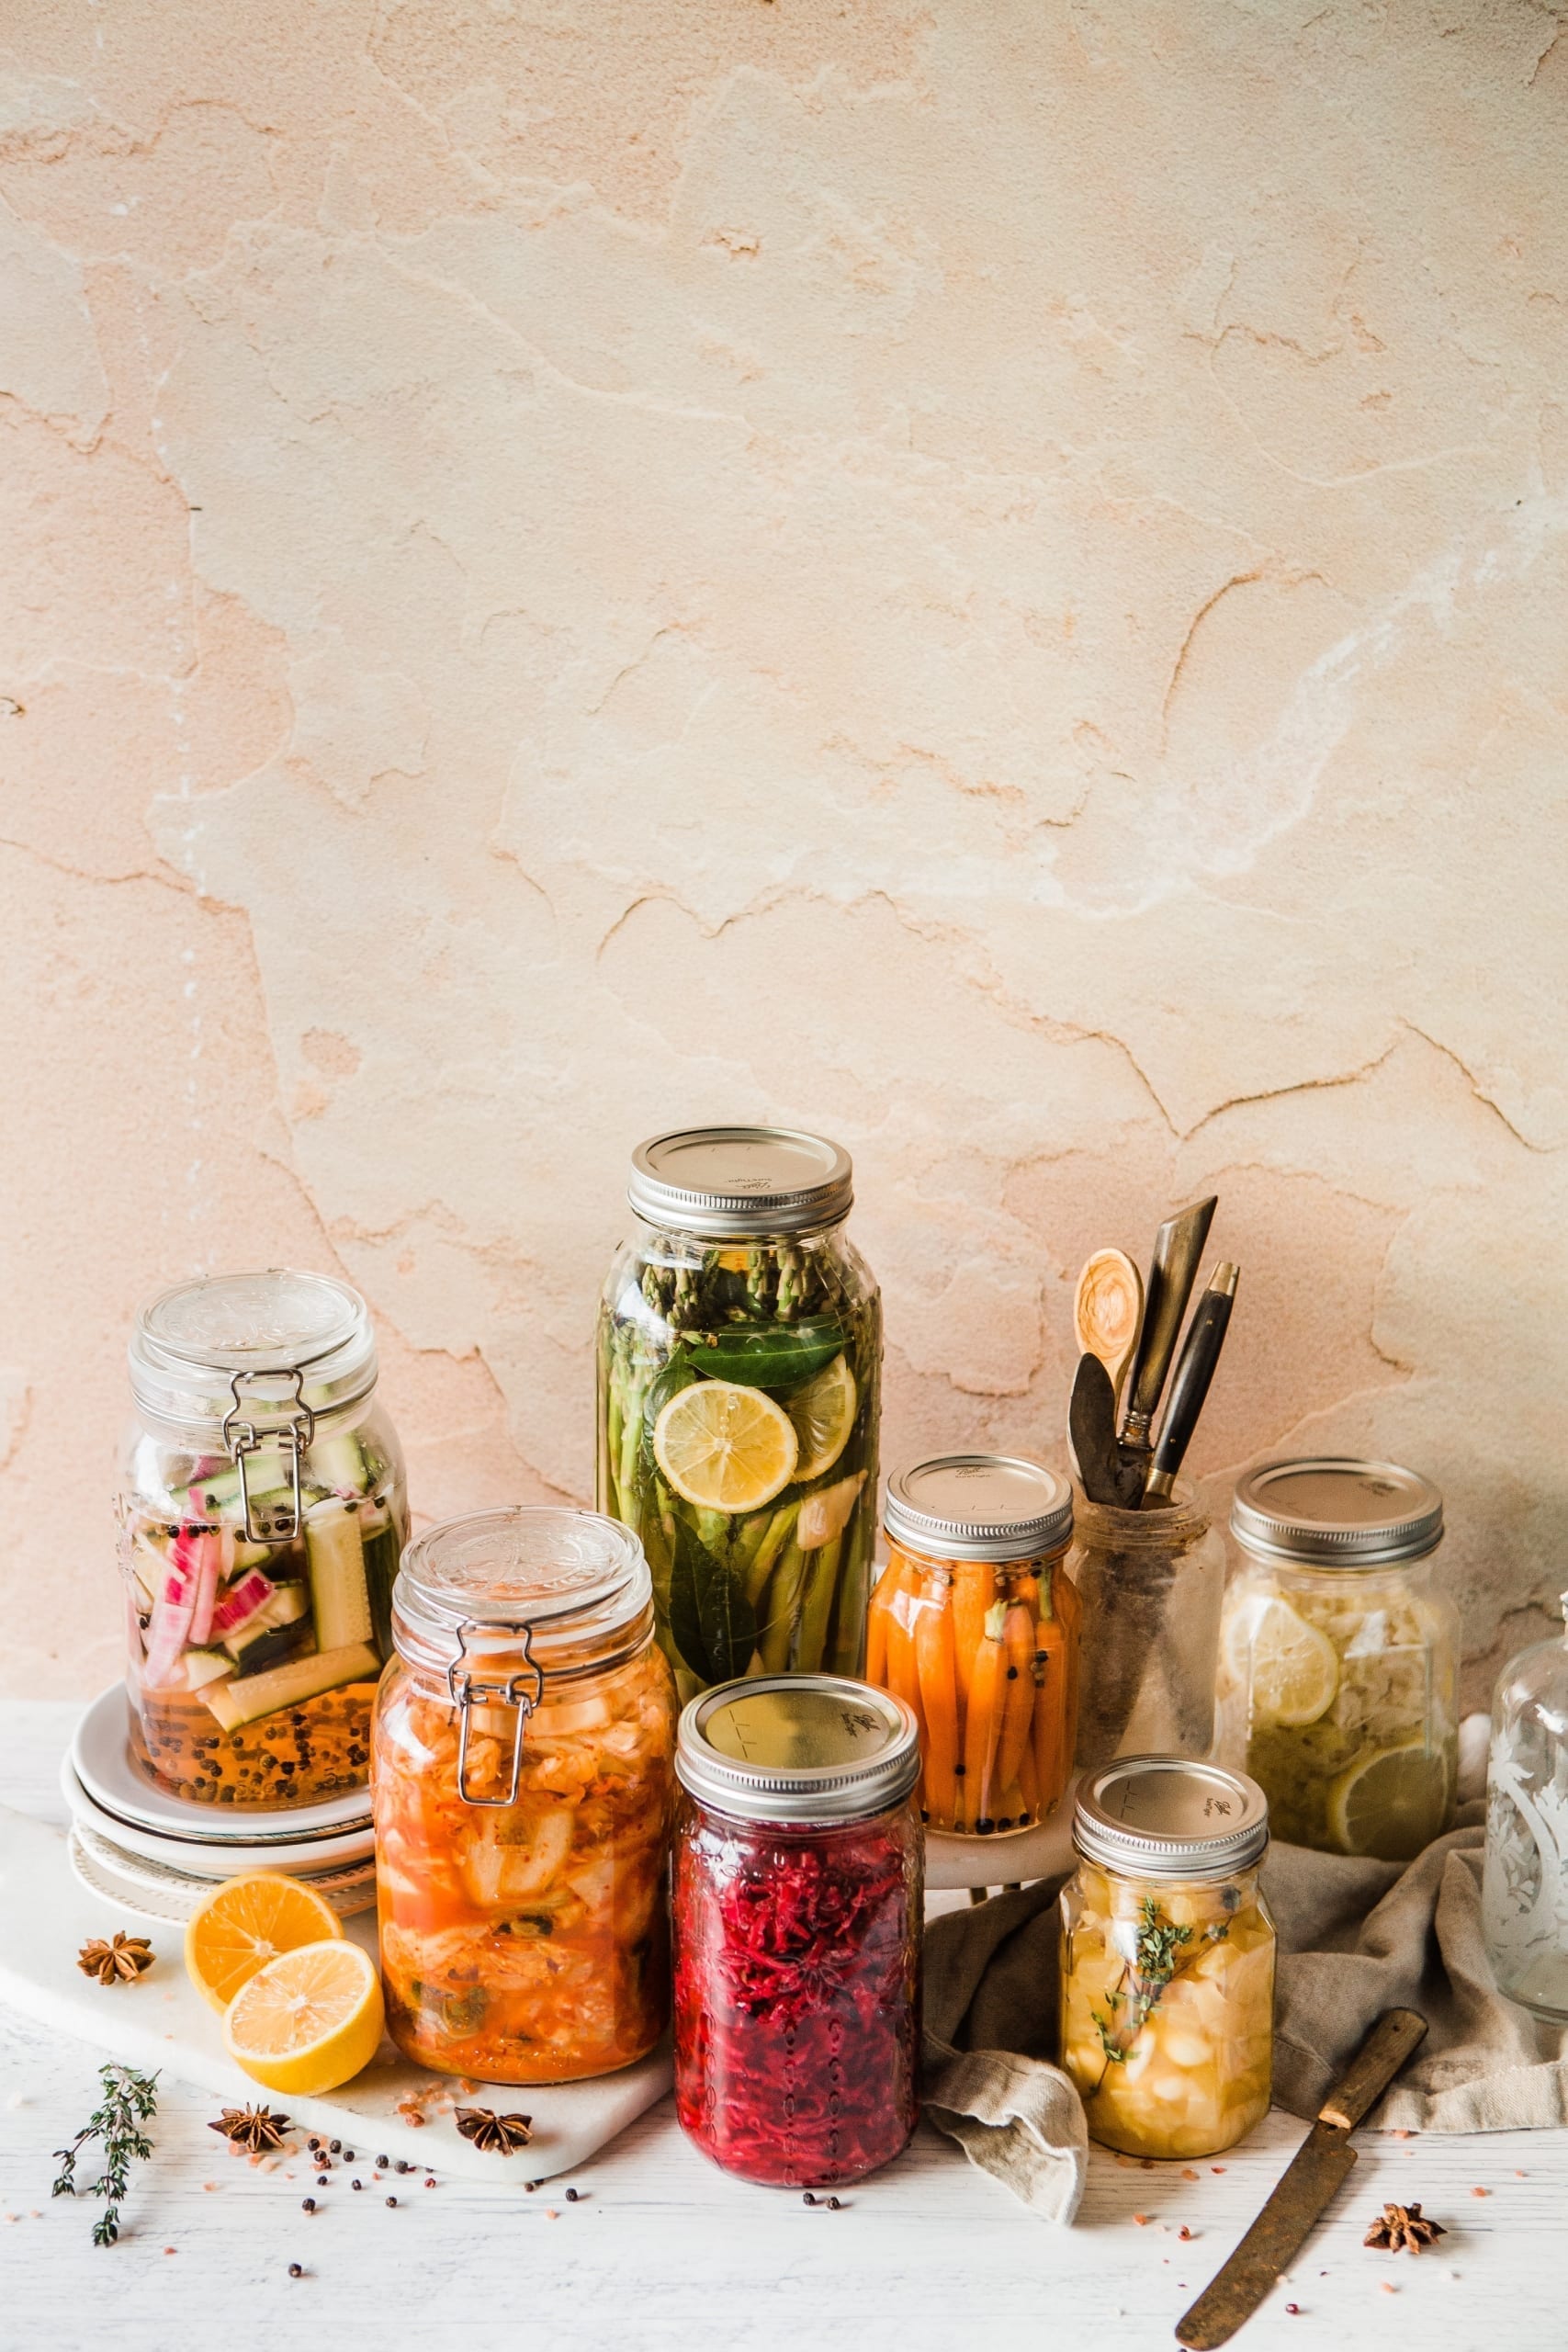 ingredients of homemade pickles